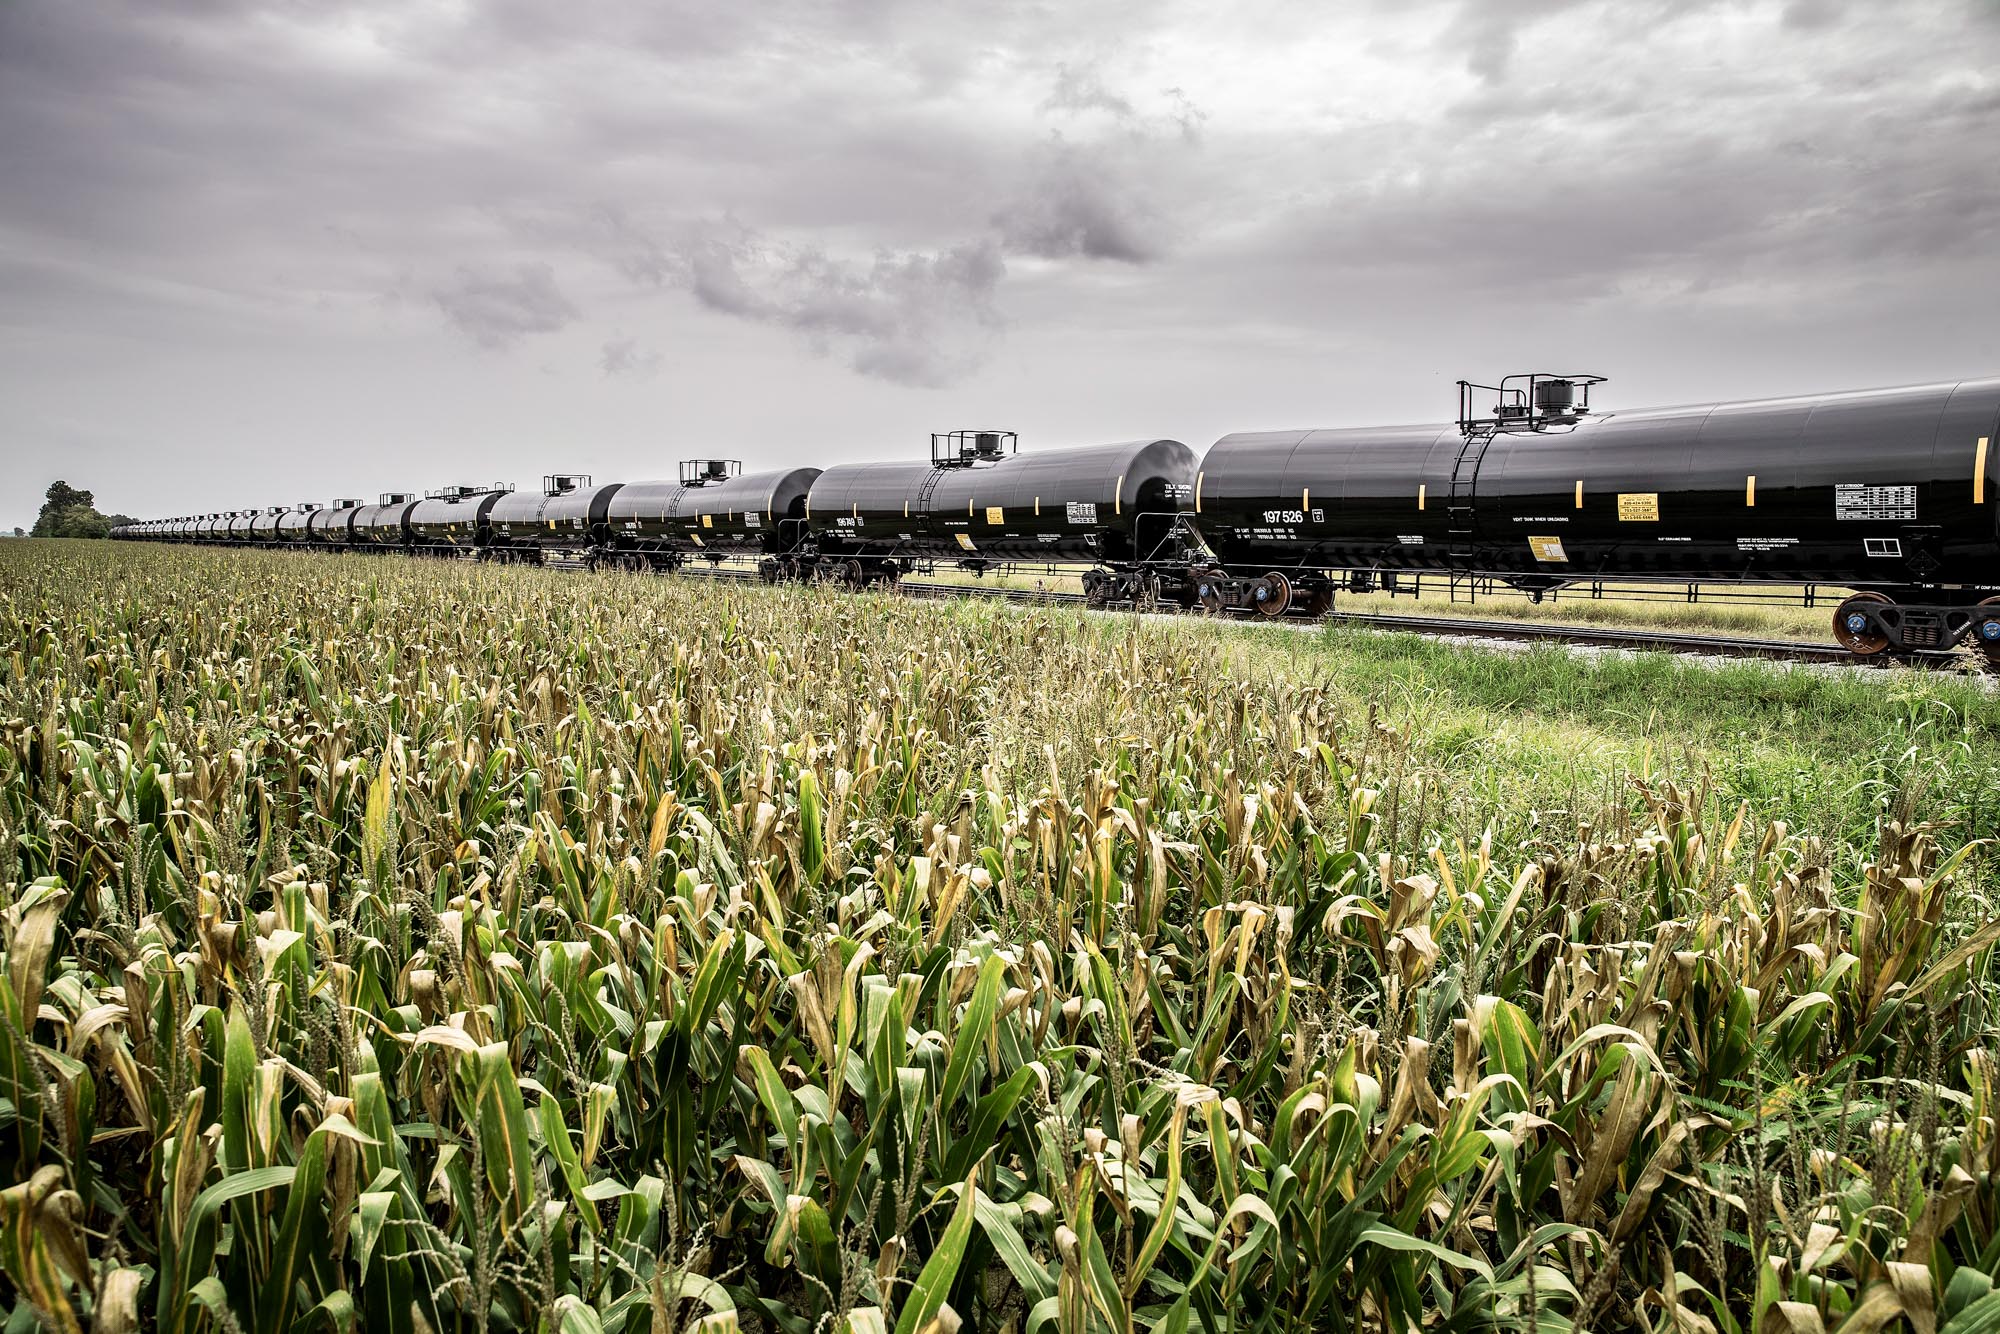 train tank cars for oil in green corn field on tracks